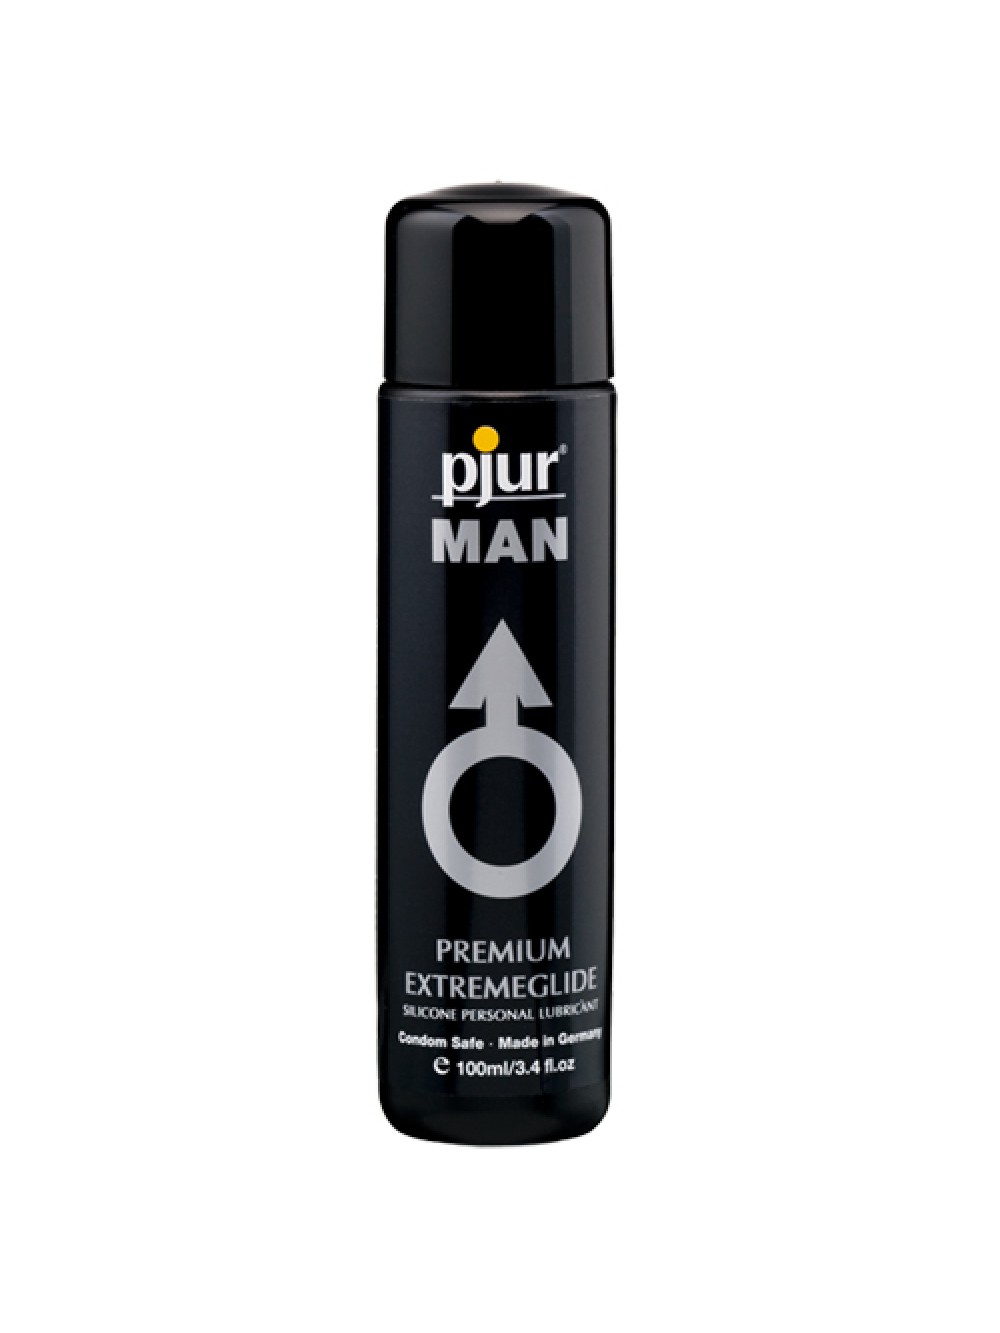 Pjur Man Premium Extremeglide - 100 ml 827160104948